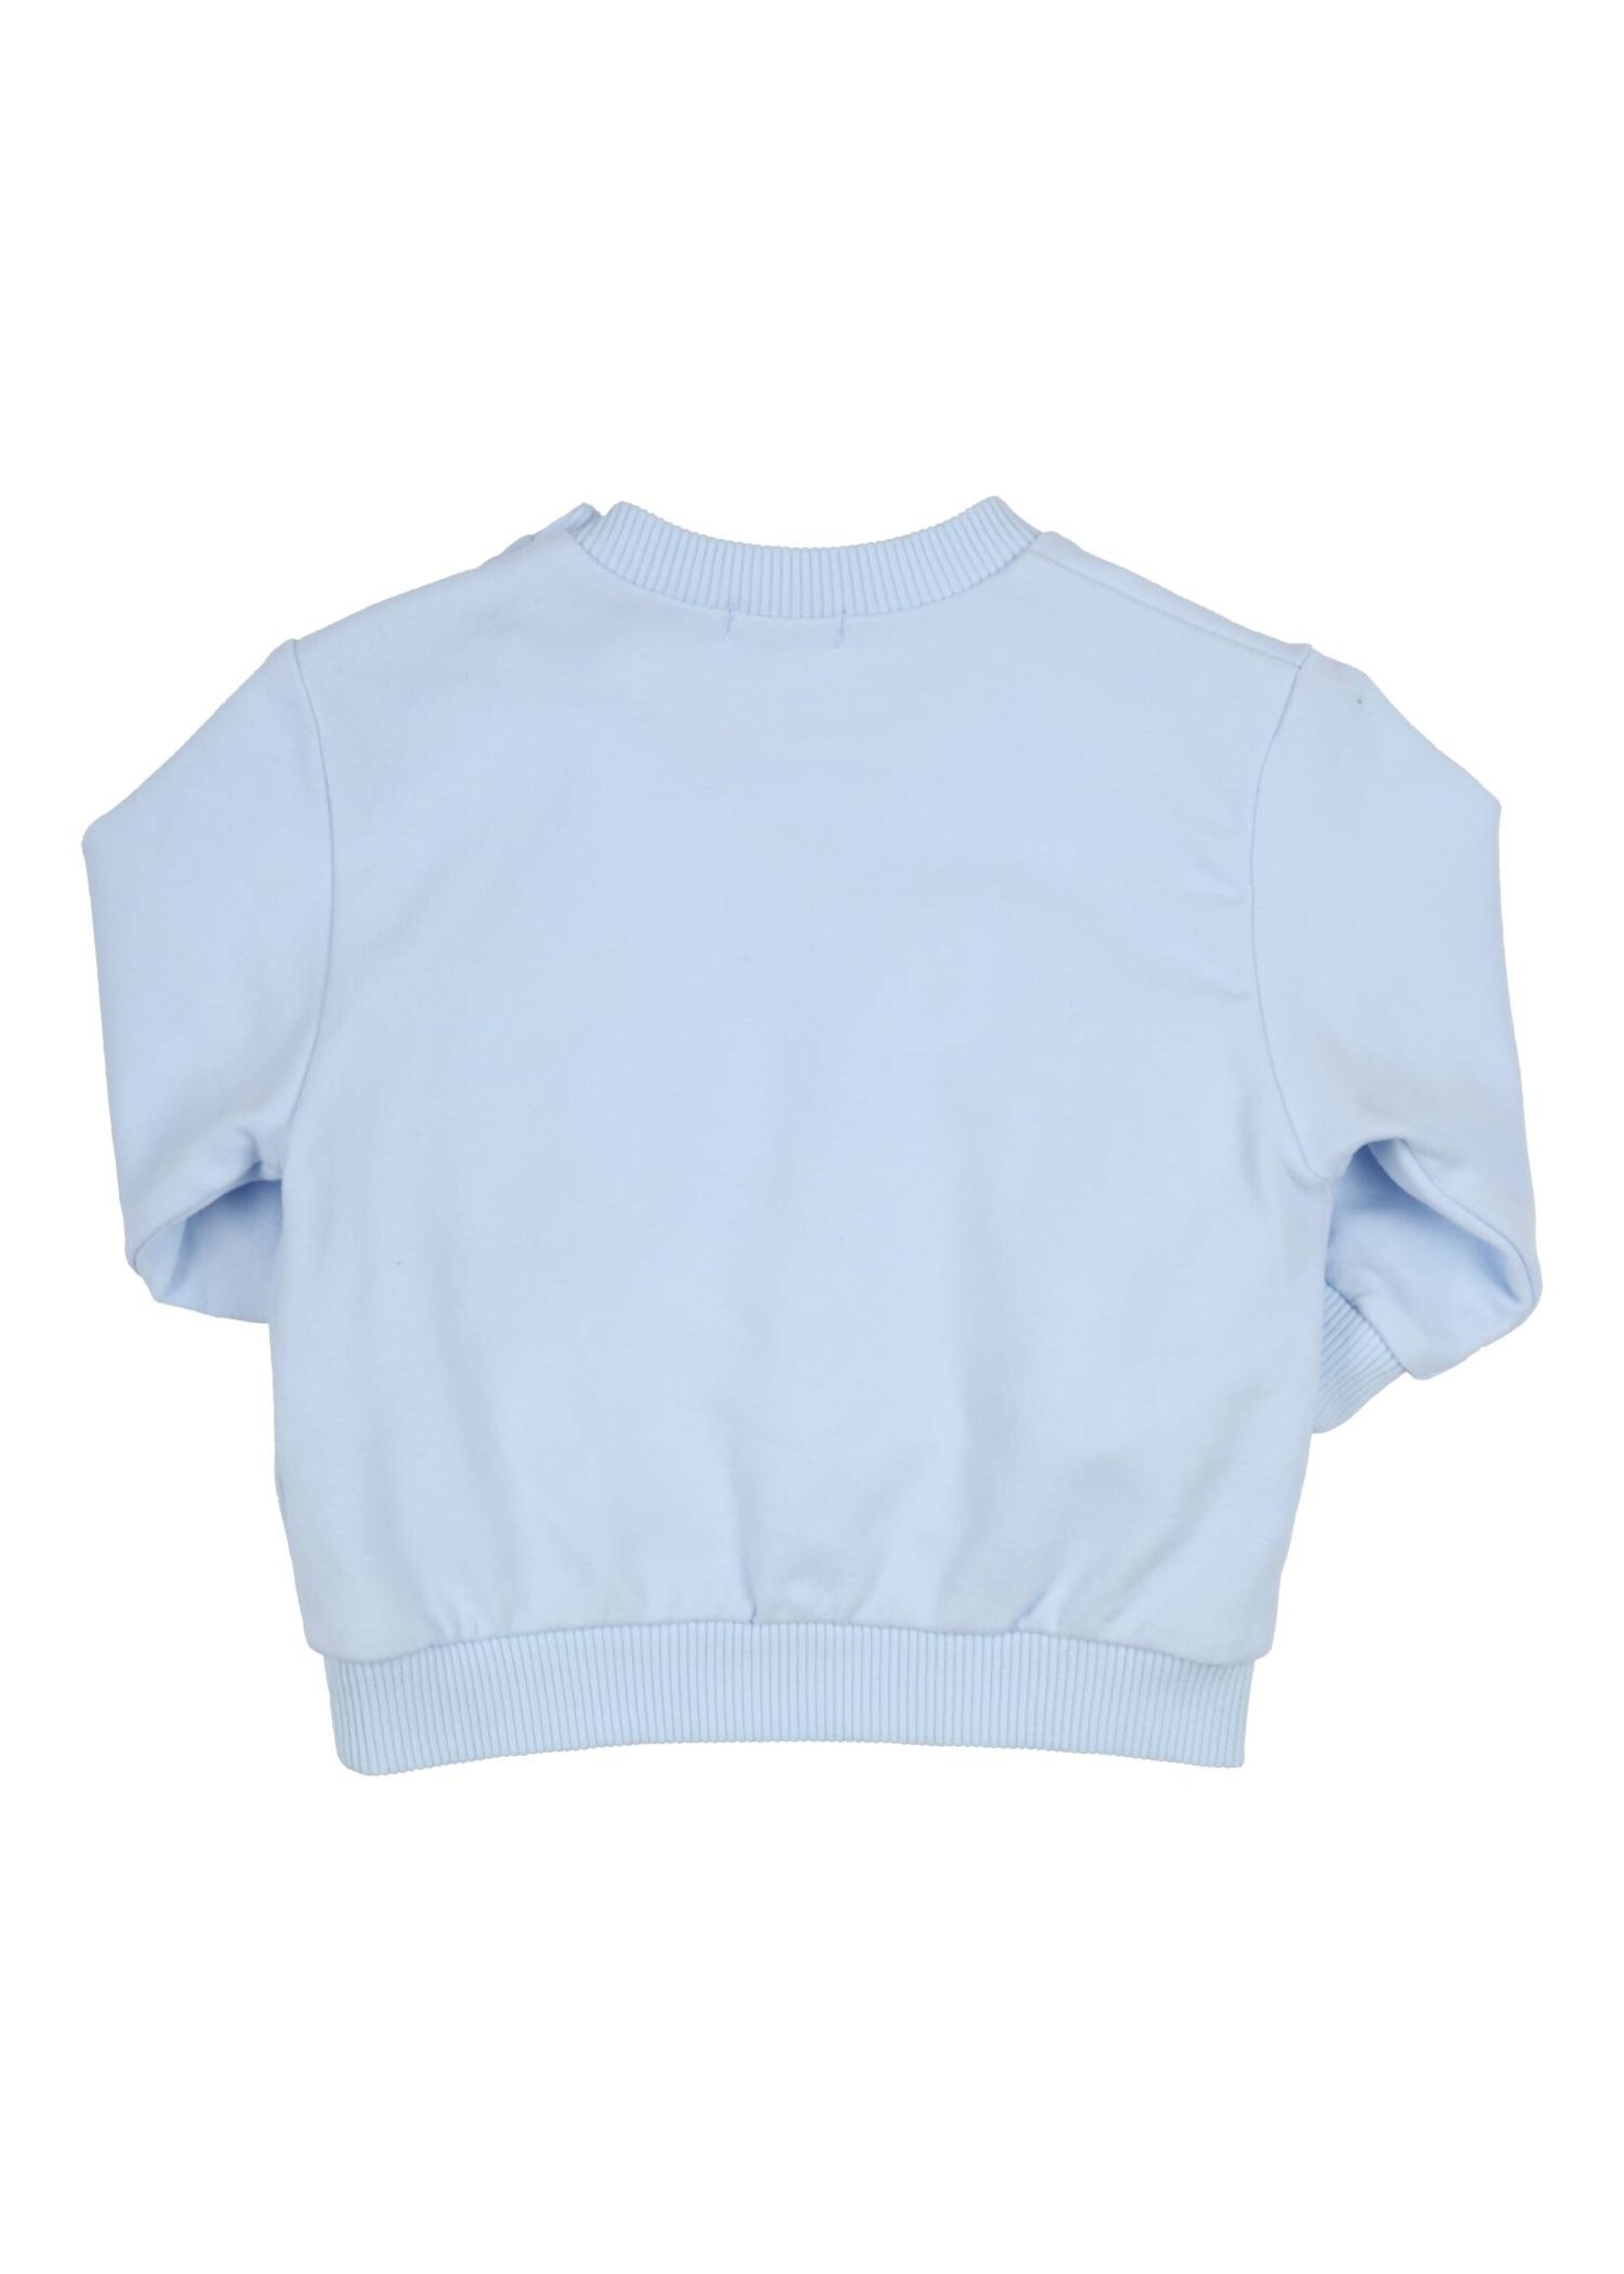 Gymp Boys Sweater Carbon 352-4201-20 Light Blue